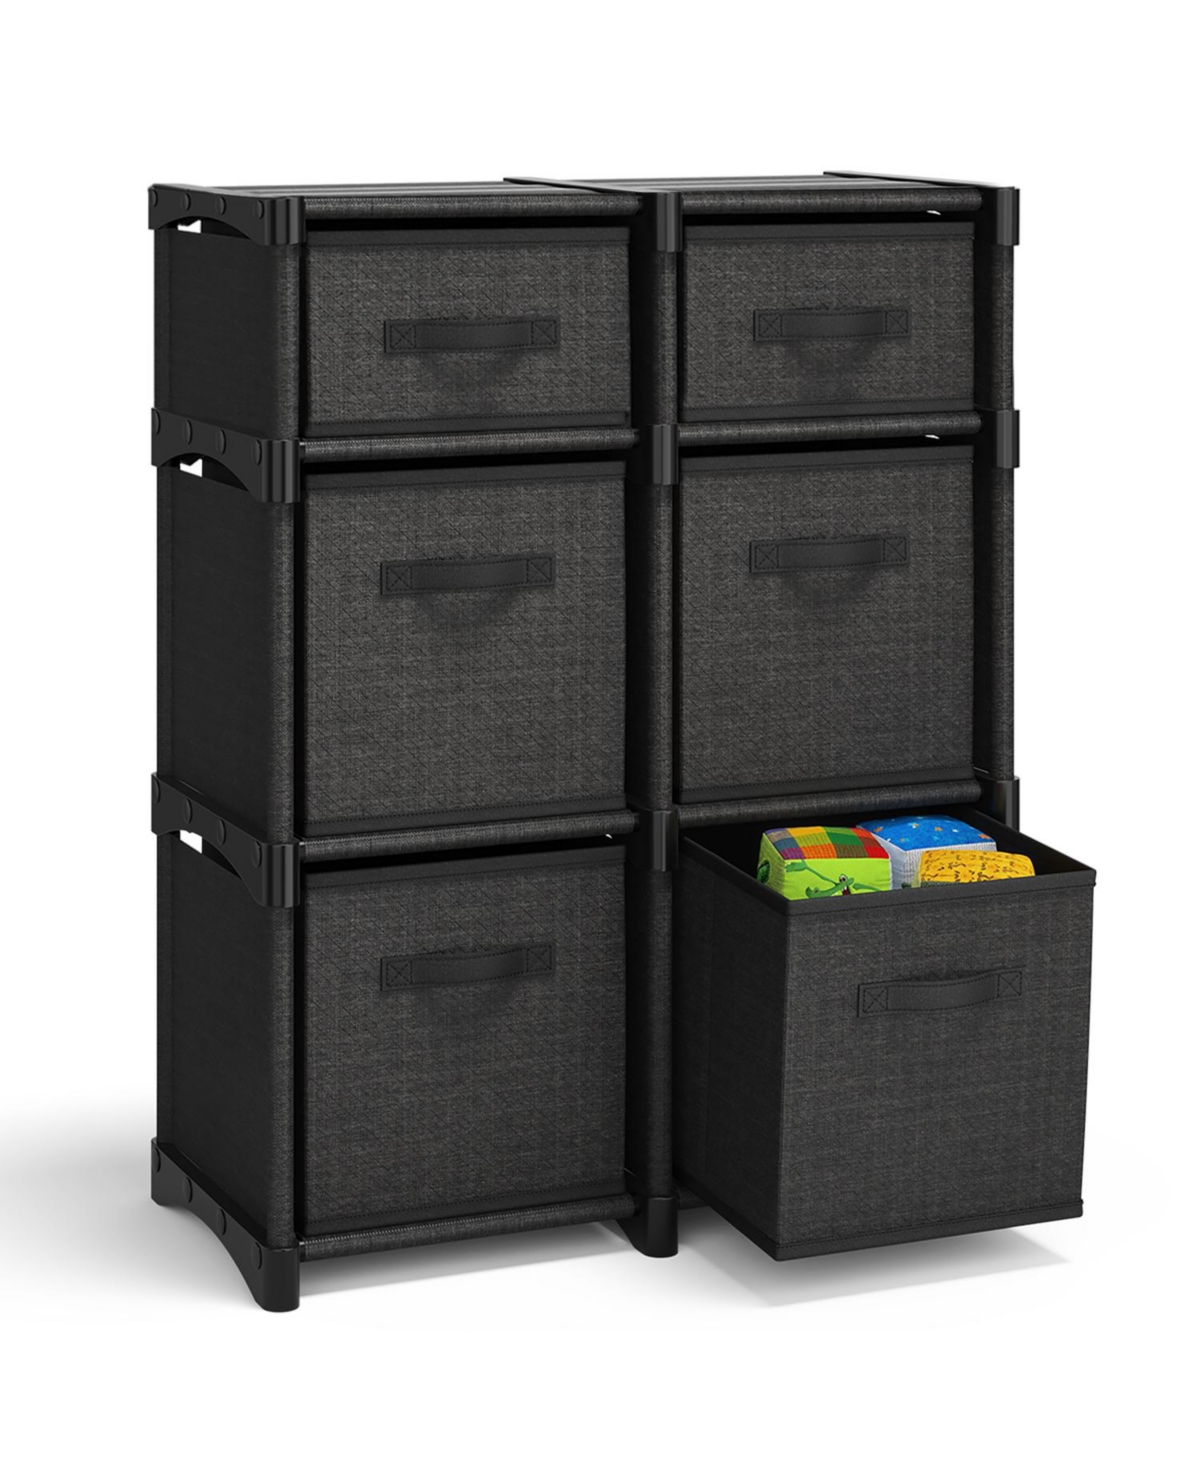 Heavy Duty 6 Cube Storage Organizer with Fabric Storage Bins - Black